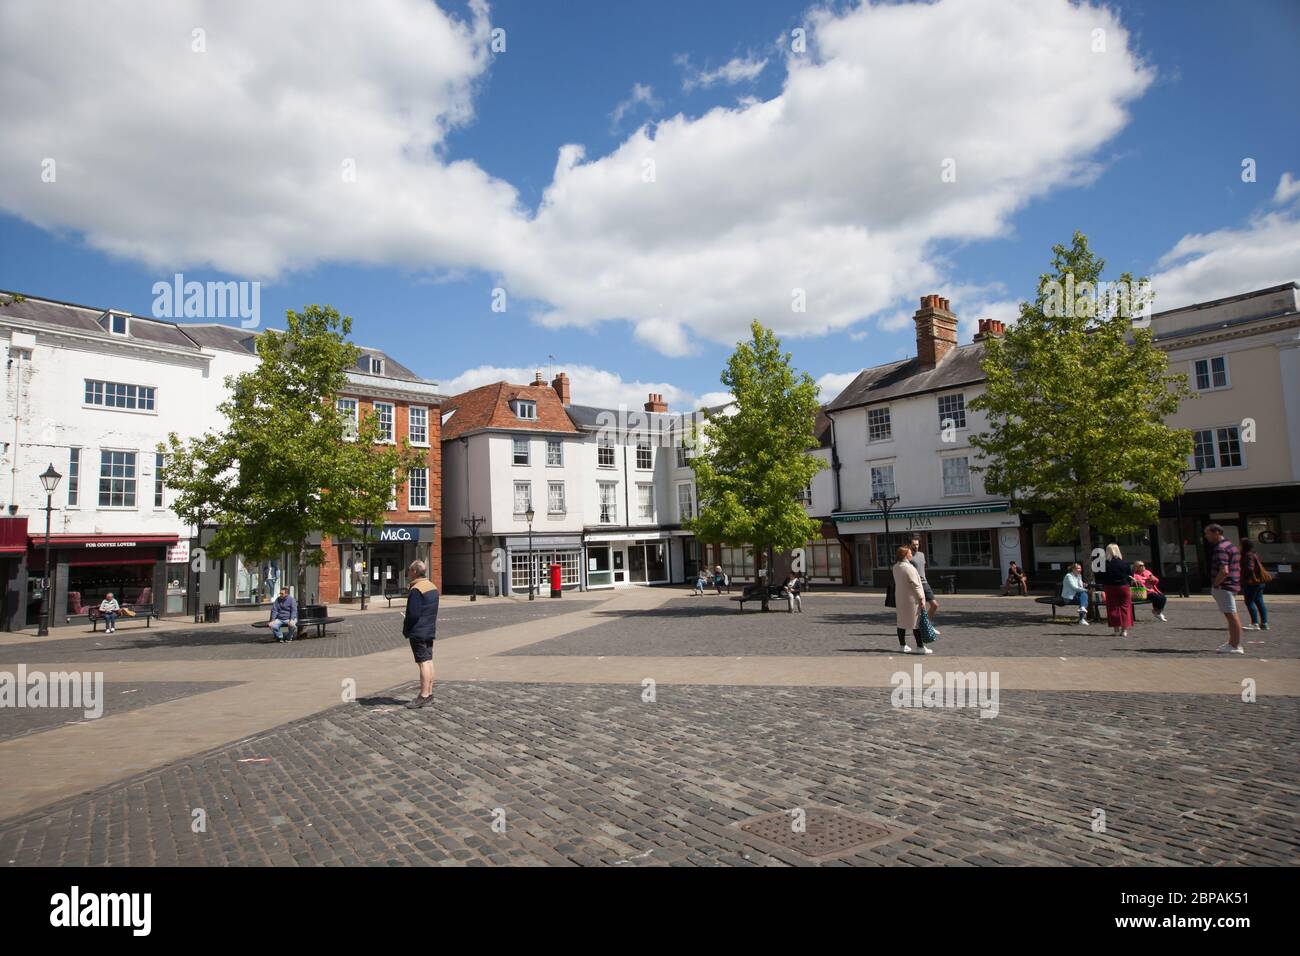 The market square in Abingdon Town Centre in Oxfordshire, UK Stock Photo